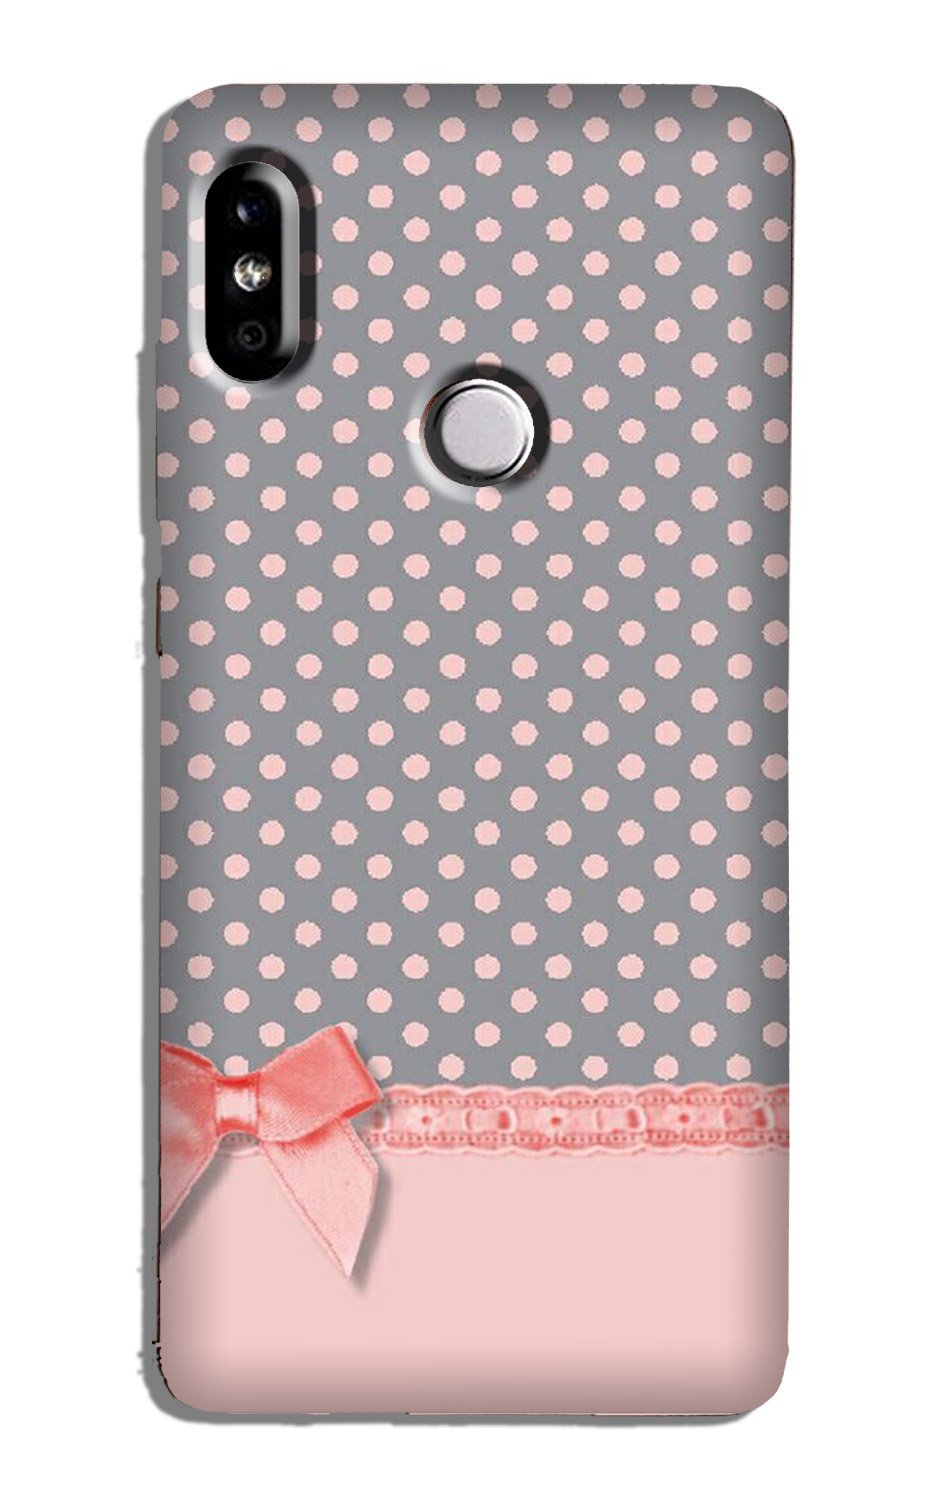 Gift Wrap2 Case for Xiaomi Redmi Y3